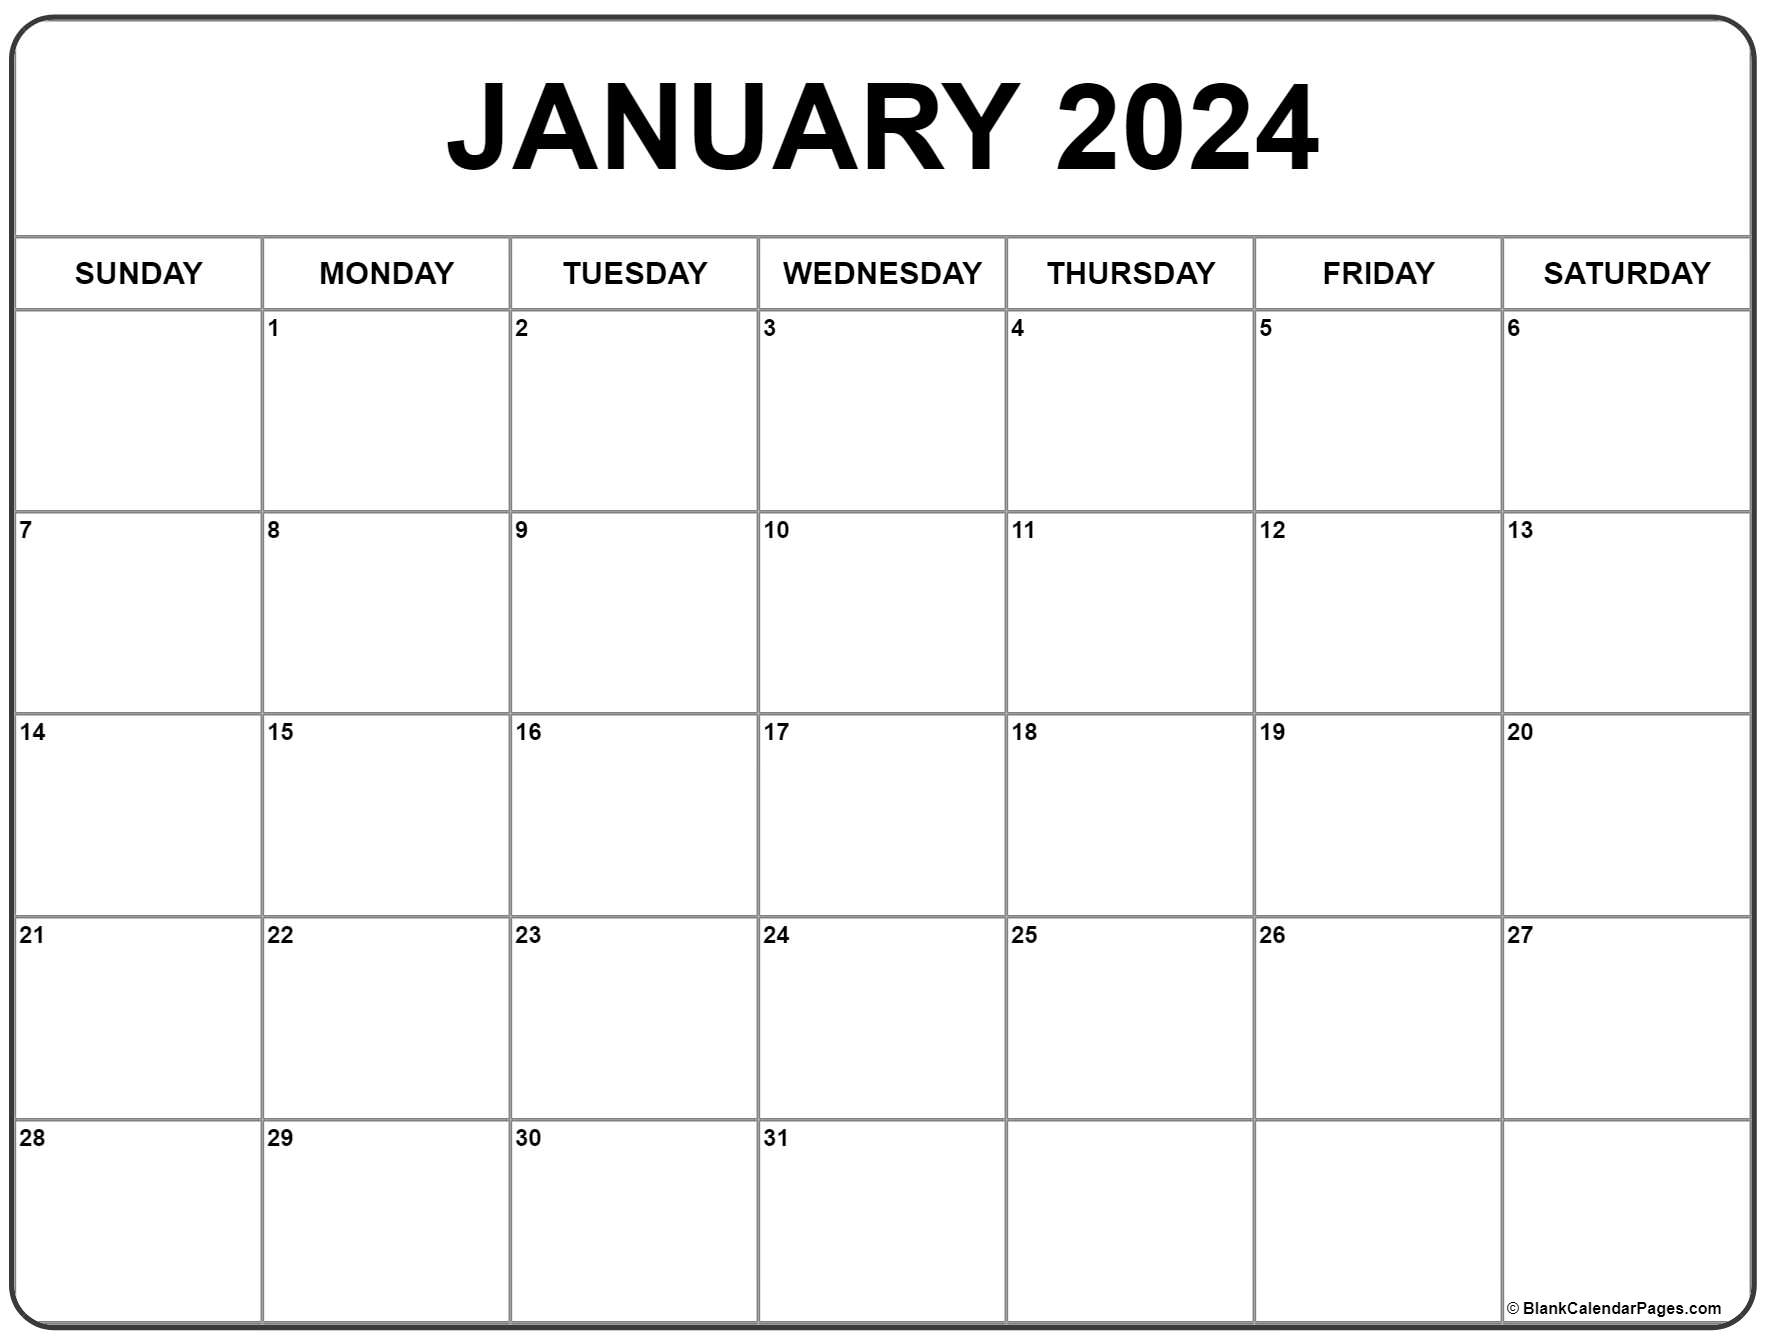 January 2024 Calendar | Free Printable Calendar | Printable Calendar 2024 January Pdf